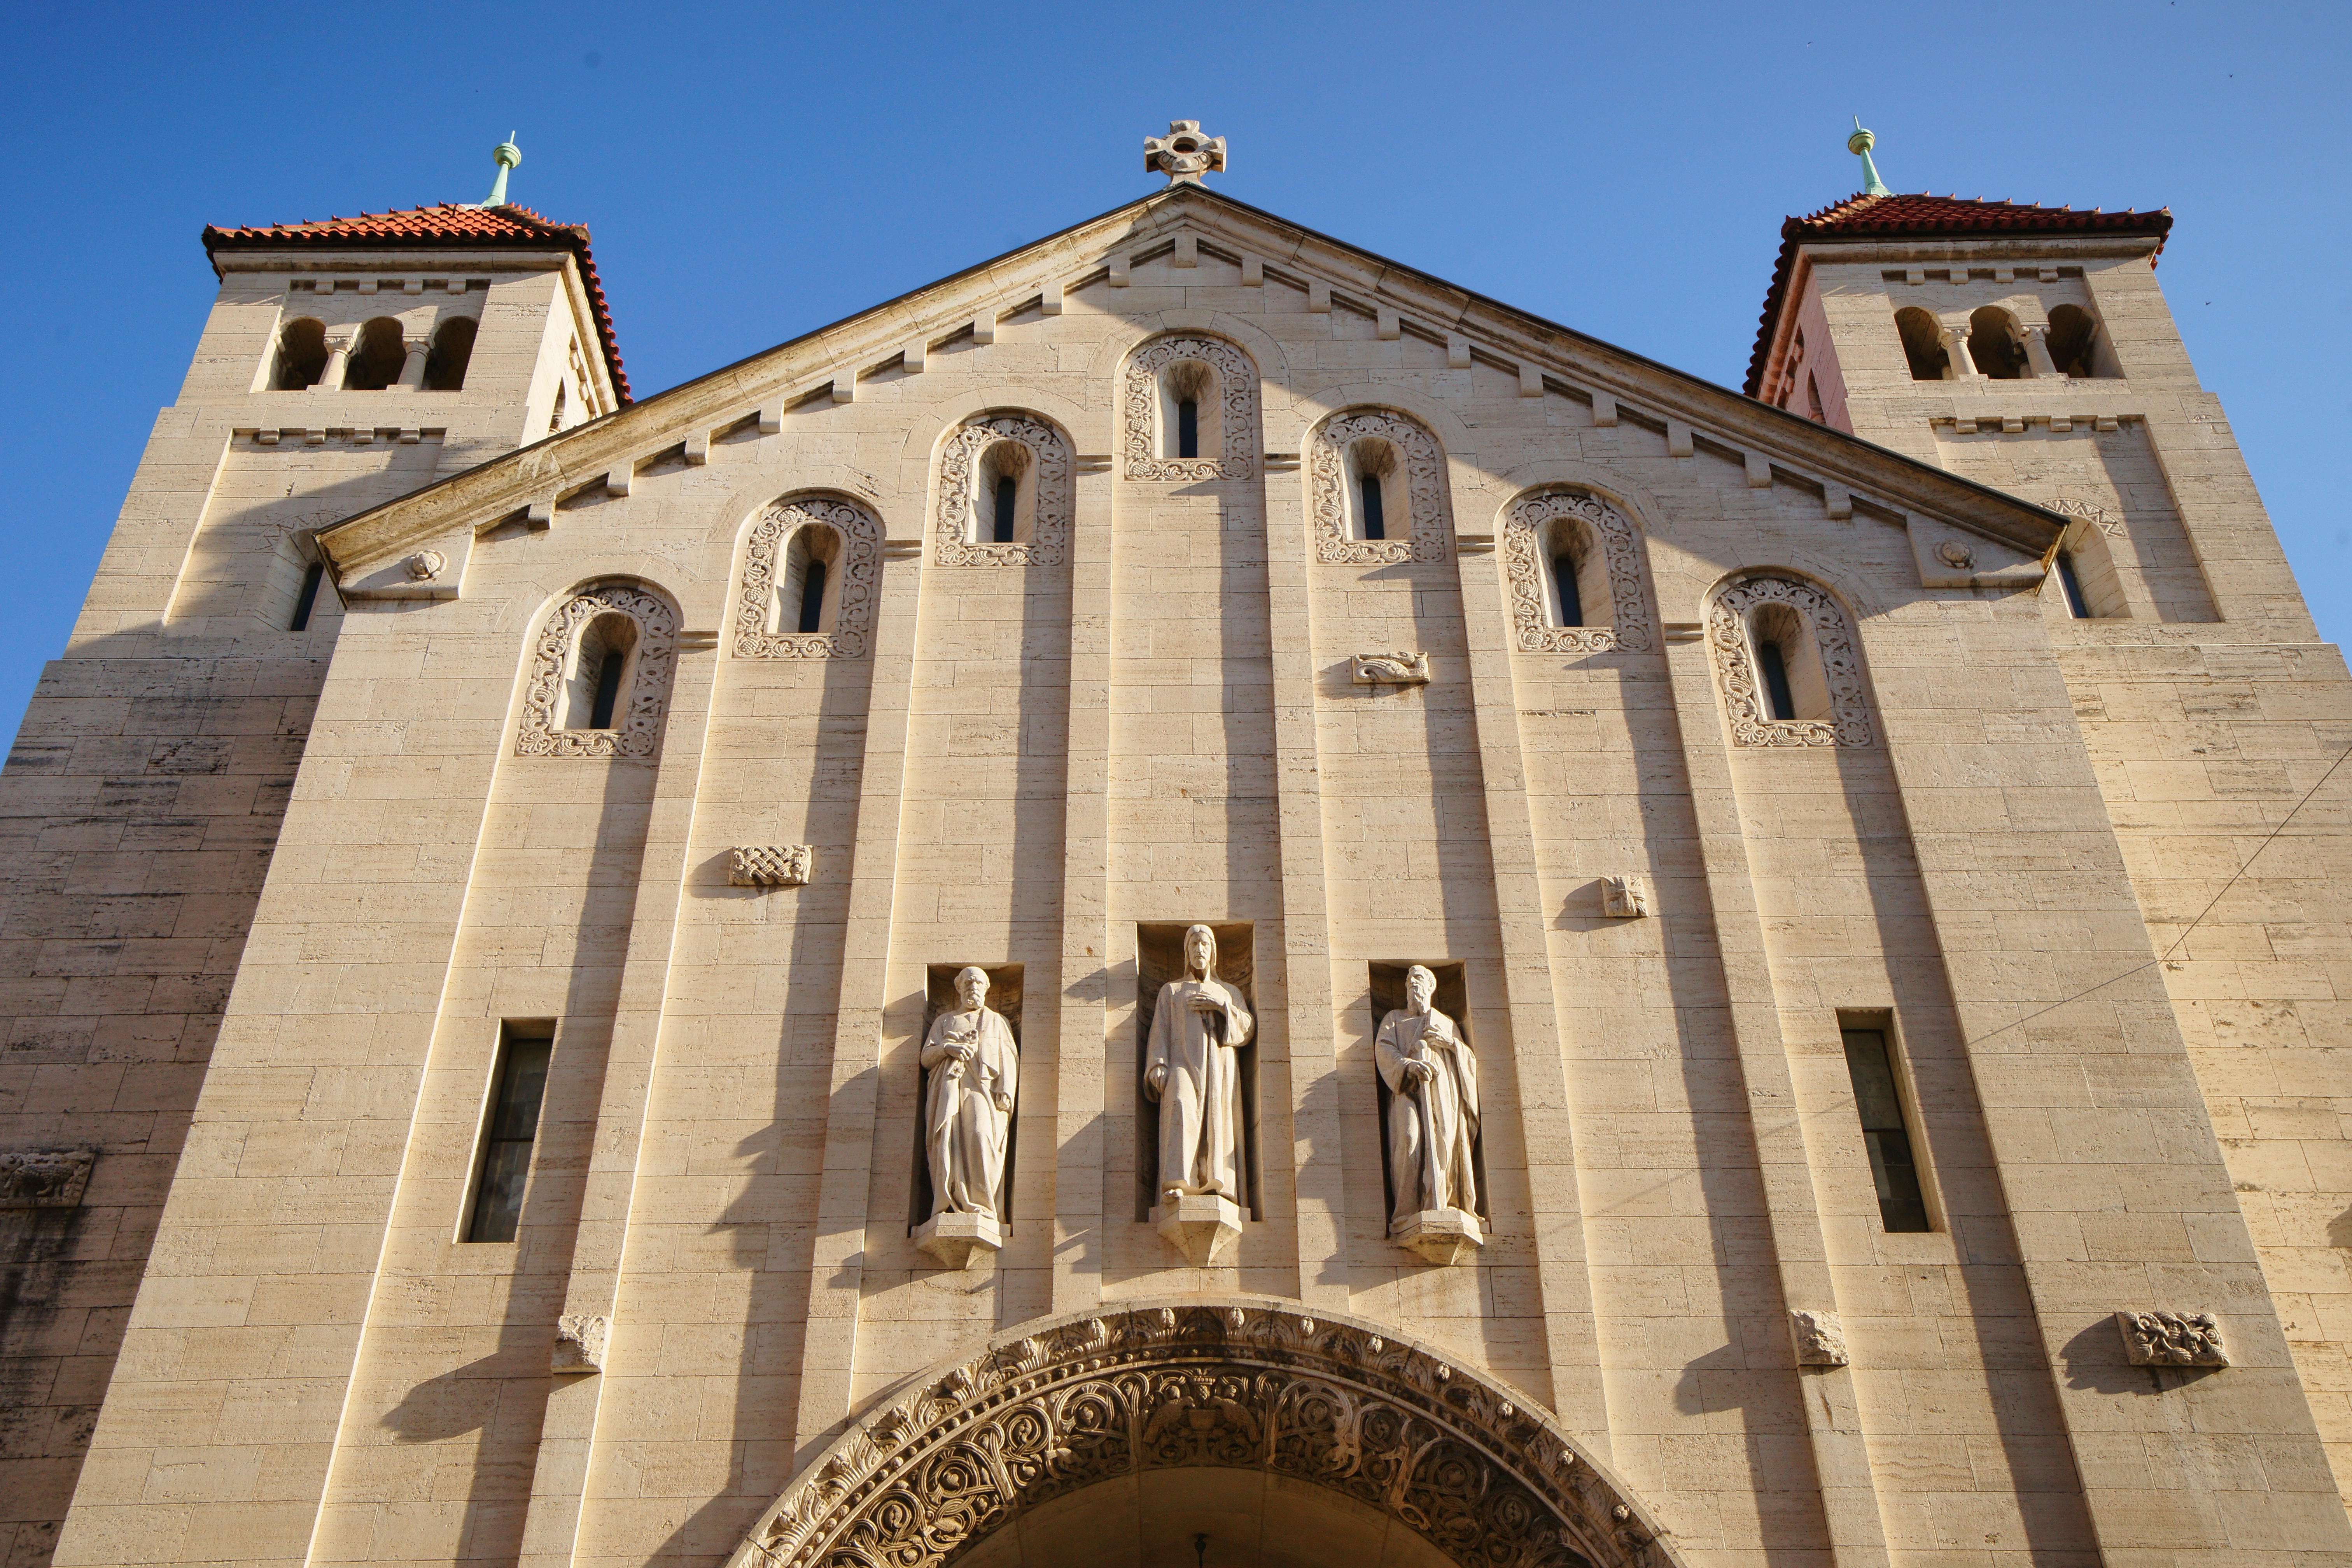 100 Jahre Christuskirche - Bachkantate am 06. November 2022 / Centenario della Christuskirche - Cantata di Bach 